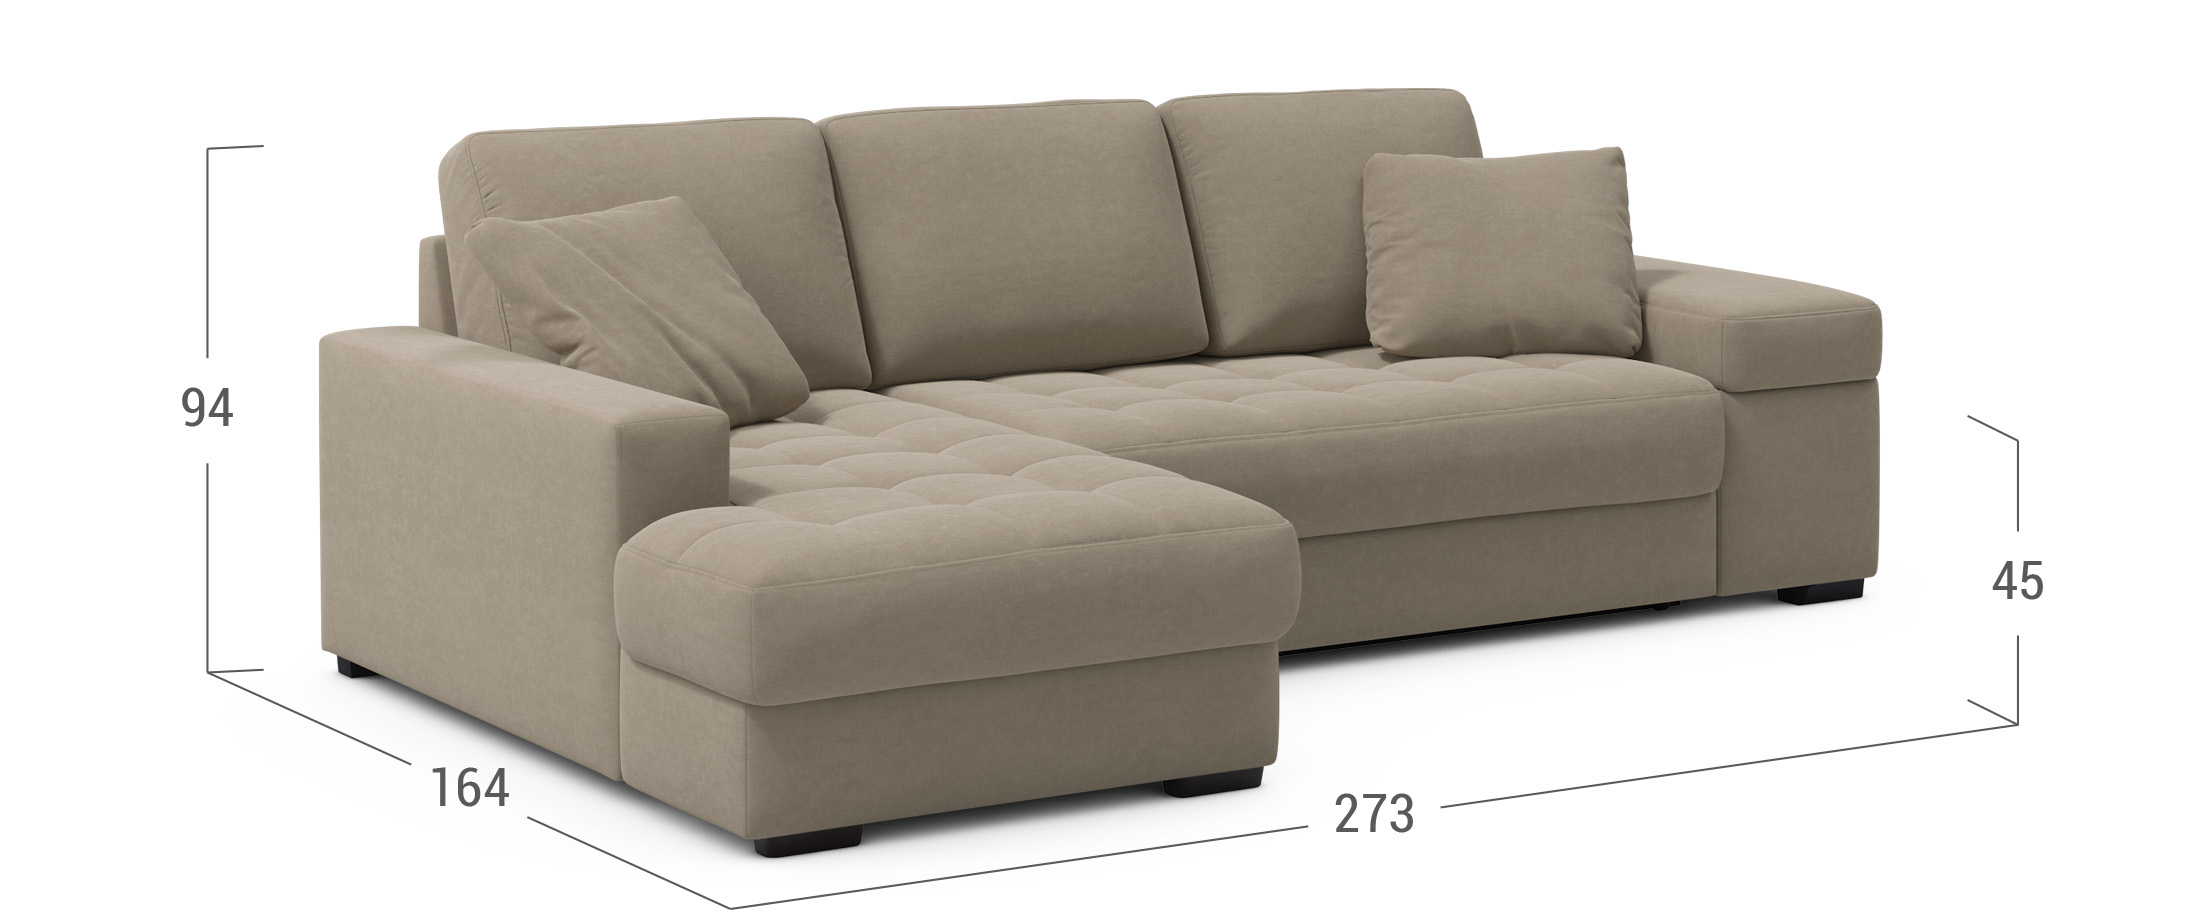 Особенности углового дивана без подлокотников 2000х1500